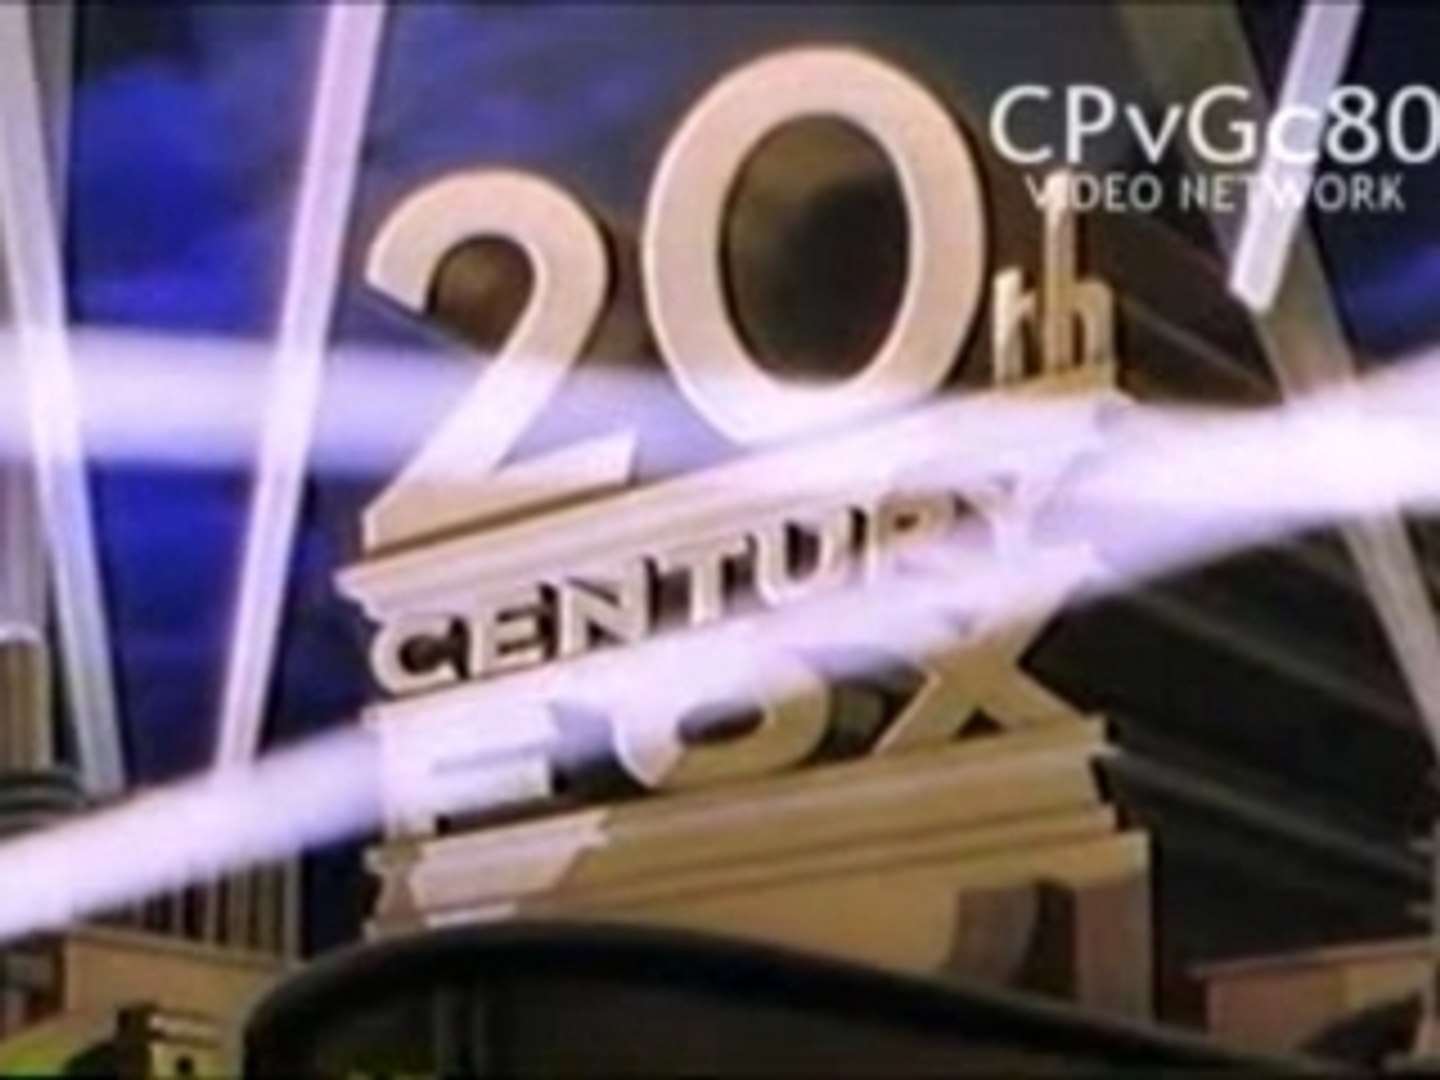 20th Century Fox Logo History (1914-2010) - video Dailymotion